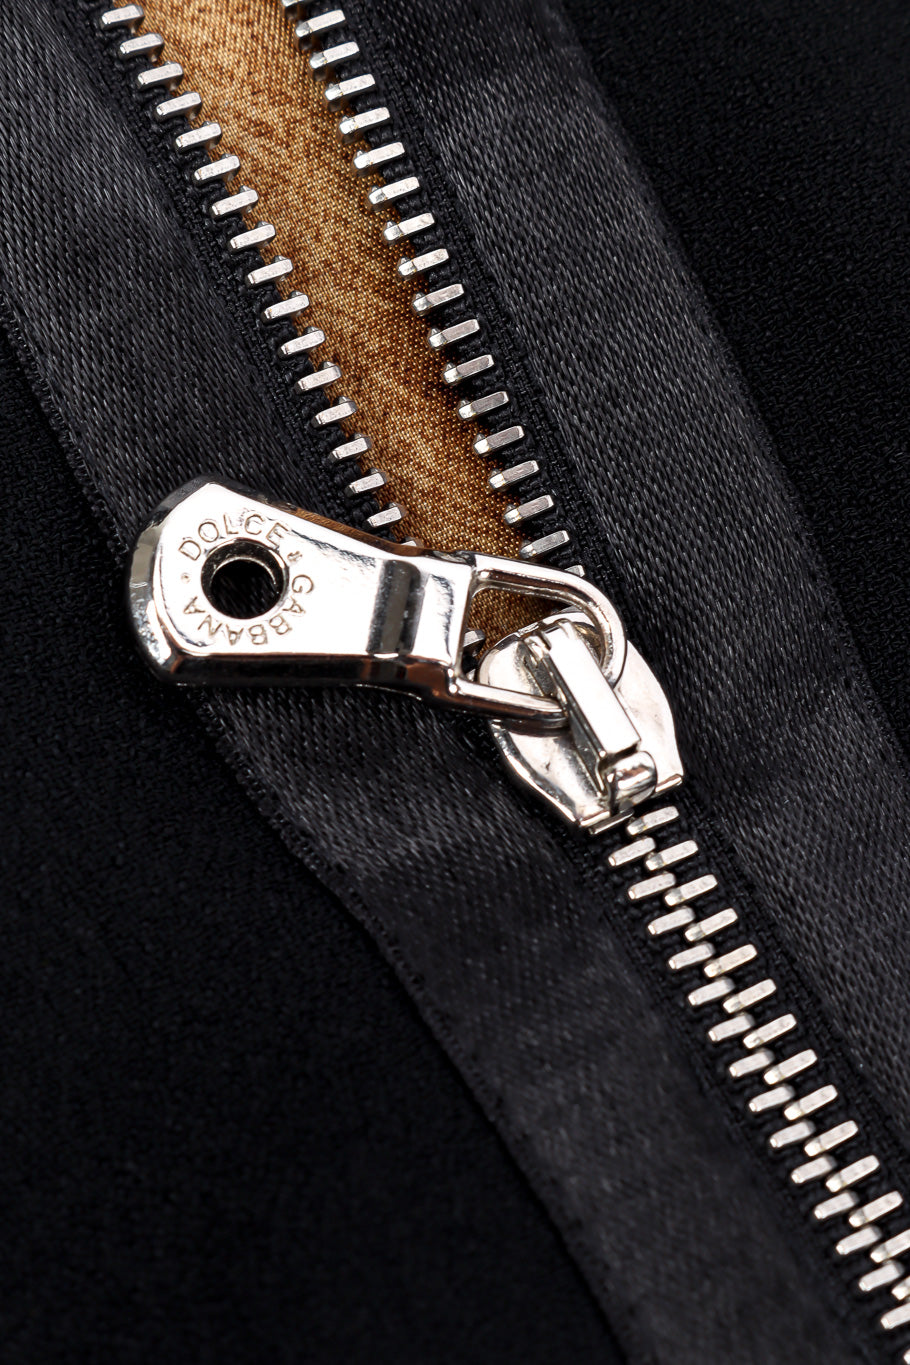 Dolce & Gabbana ruched sheath dress zipper closeup @recessla